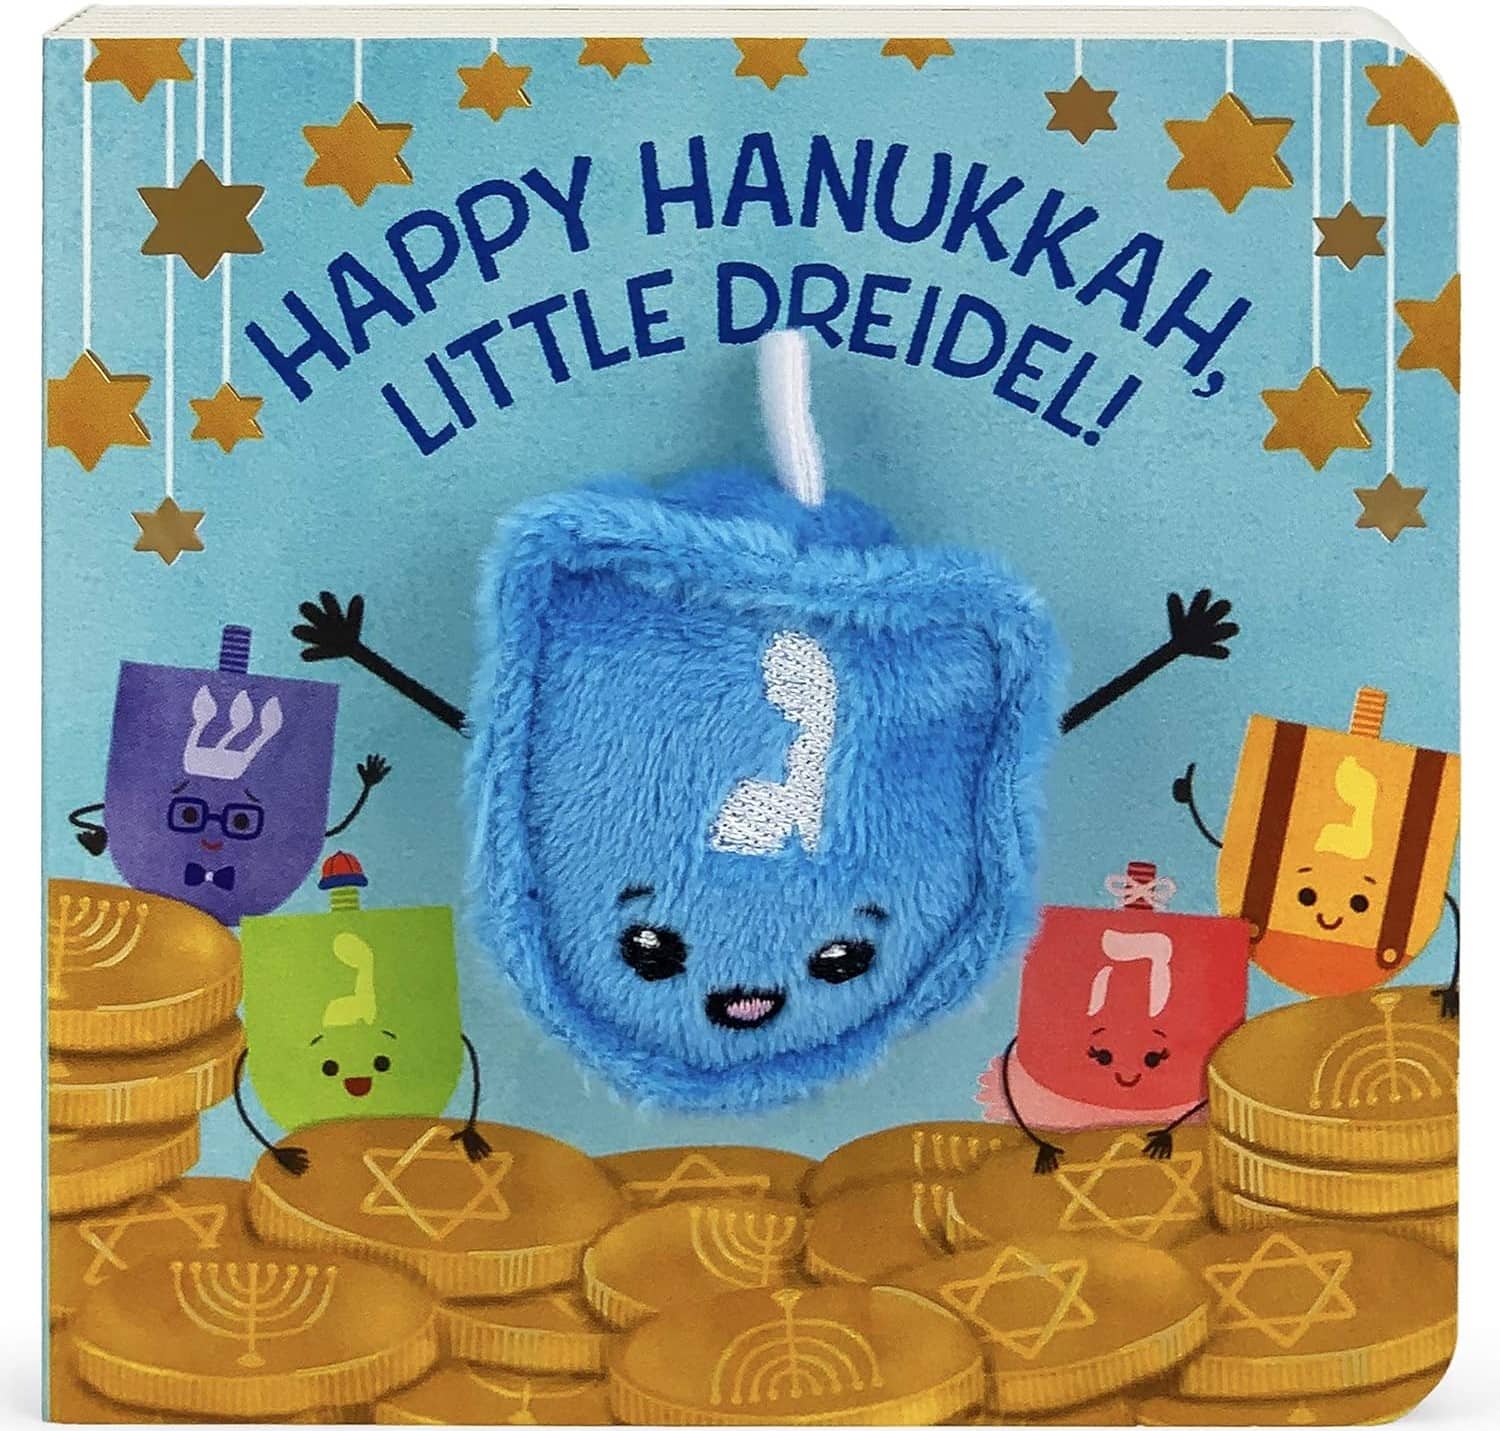 "Happy Hanukkah, Little Dreidel!" by Brick Puffinton